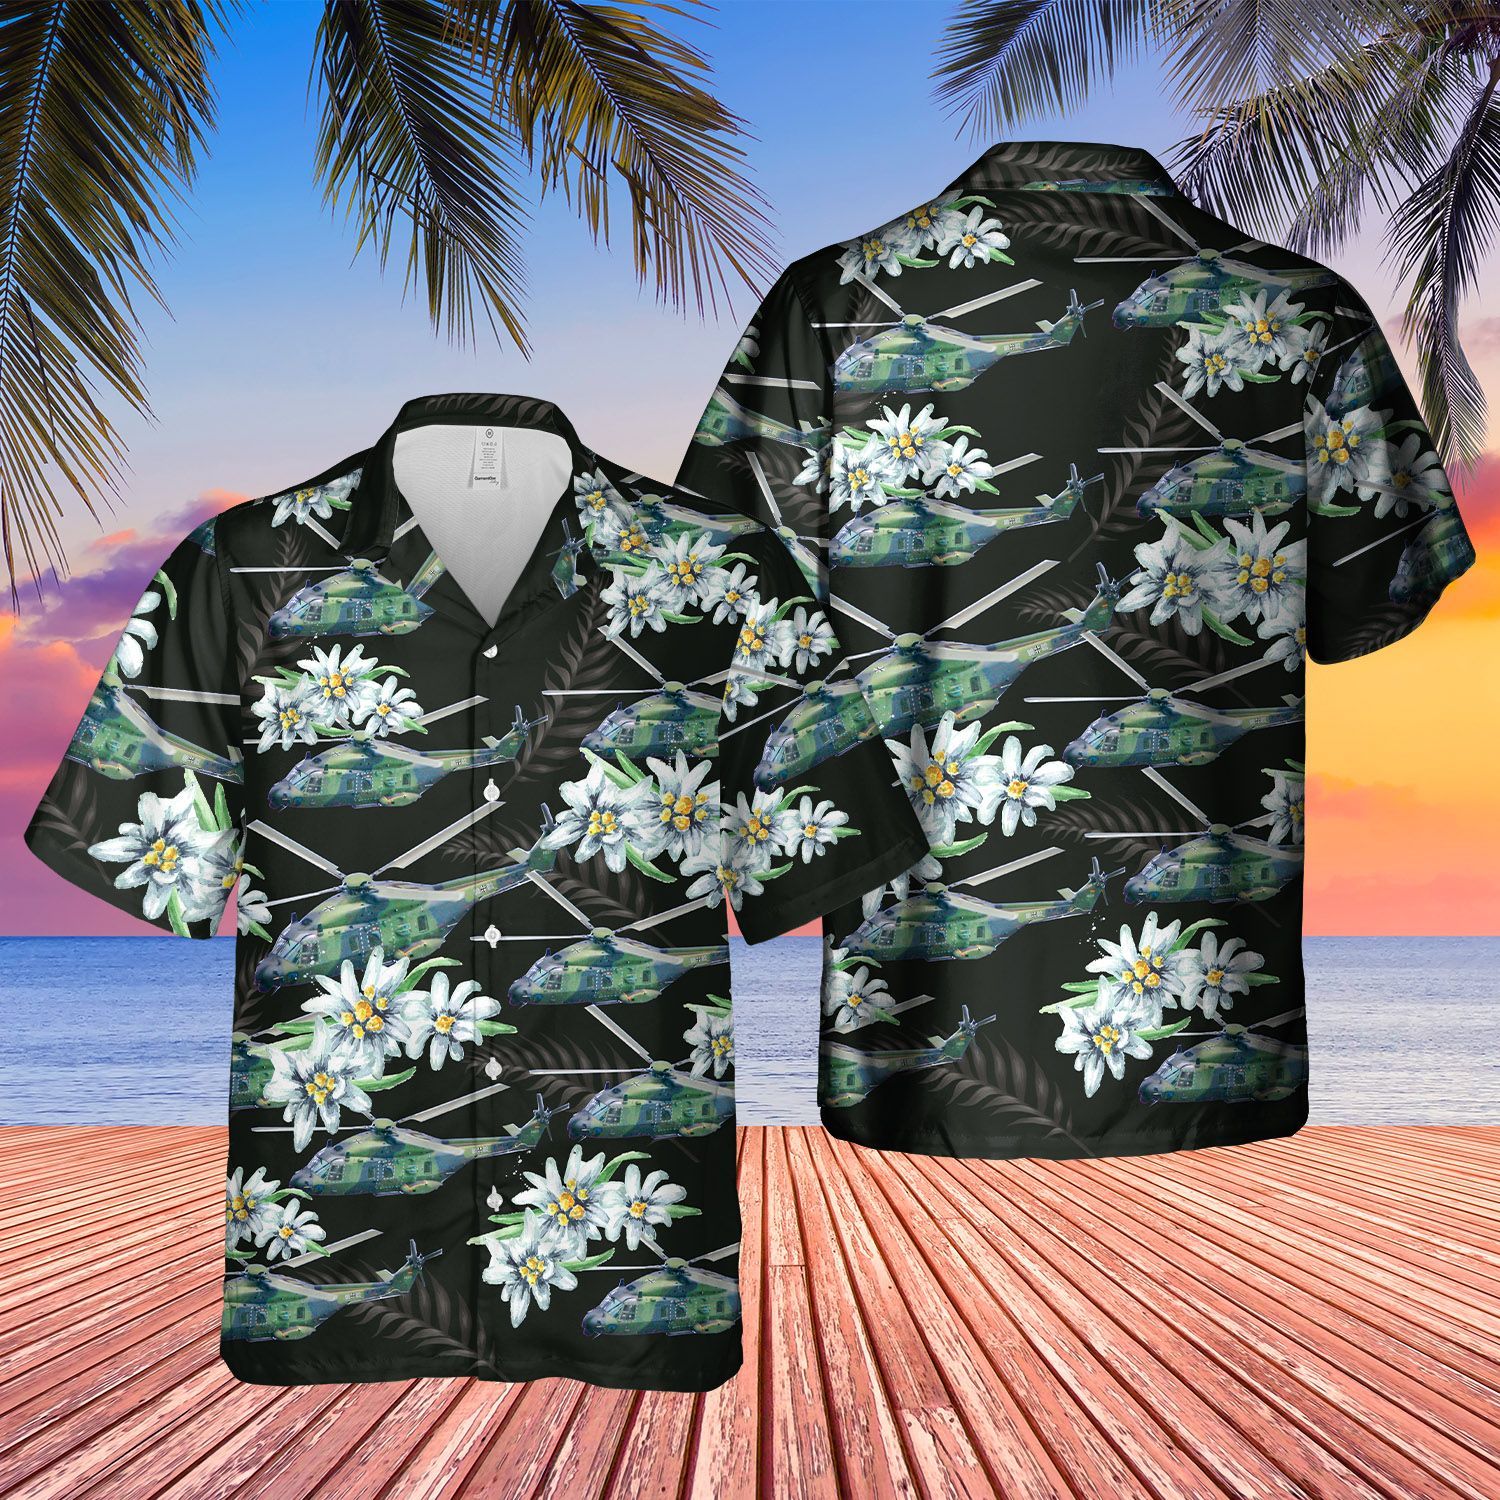 Enjoy your summer with top cool hawaiian shirt below 180